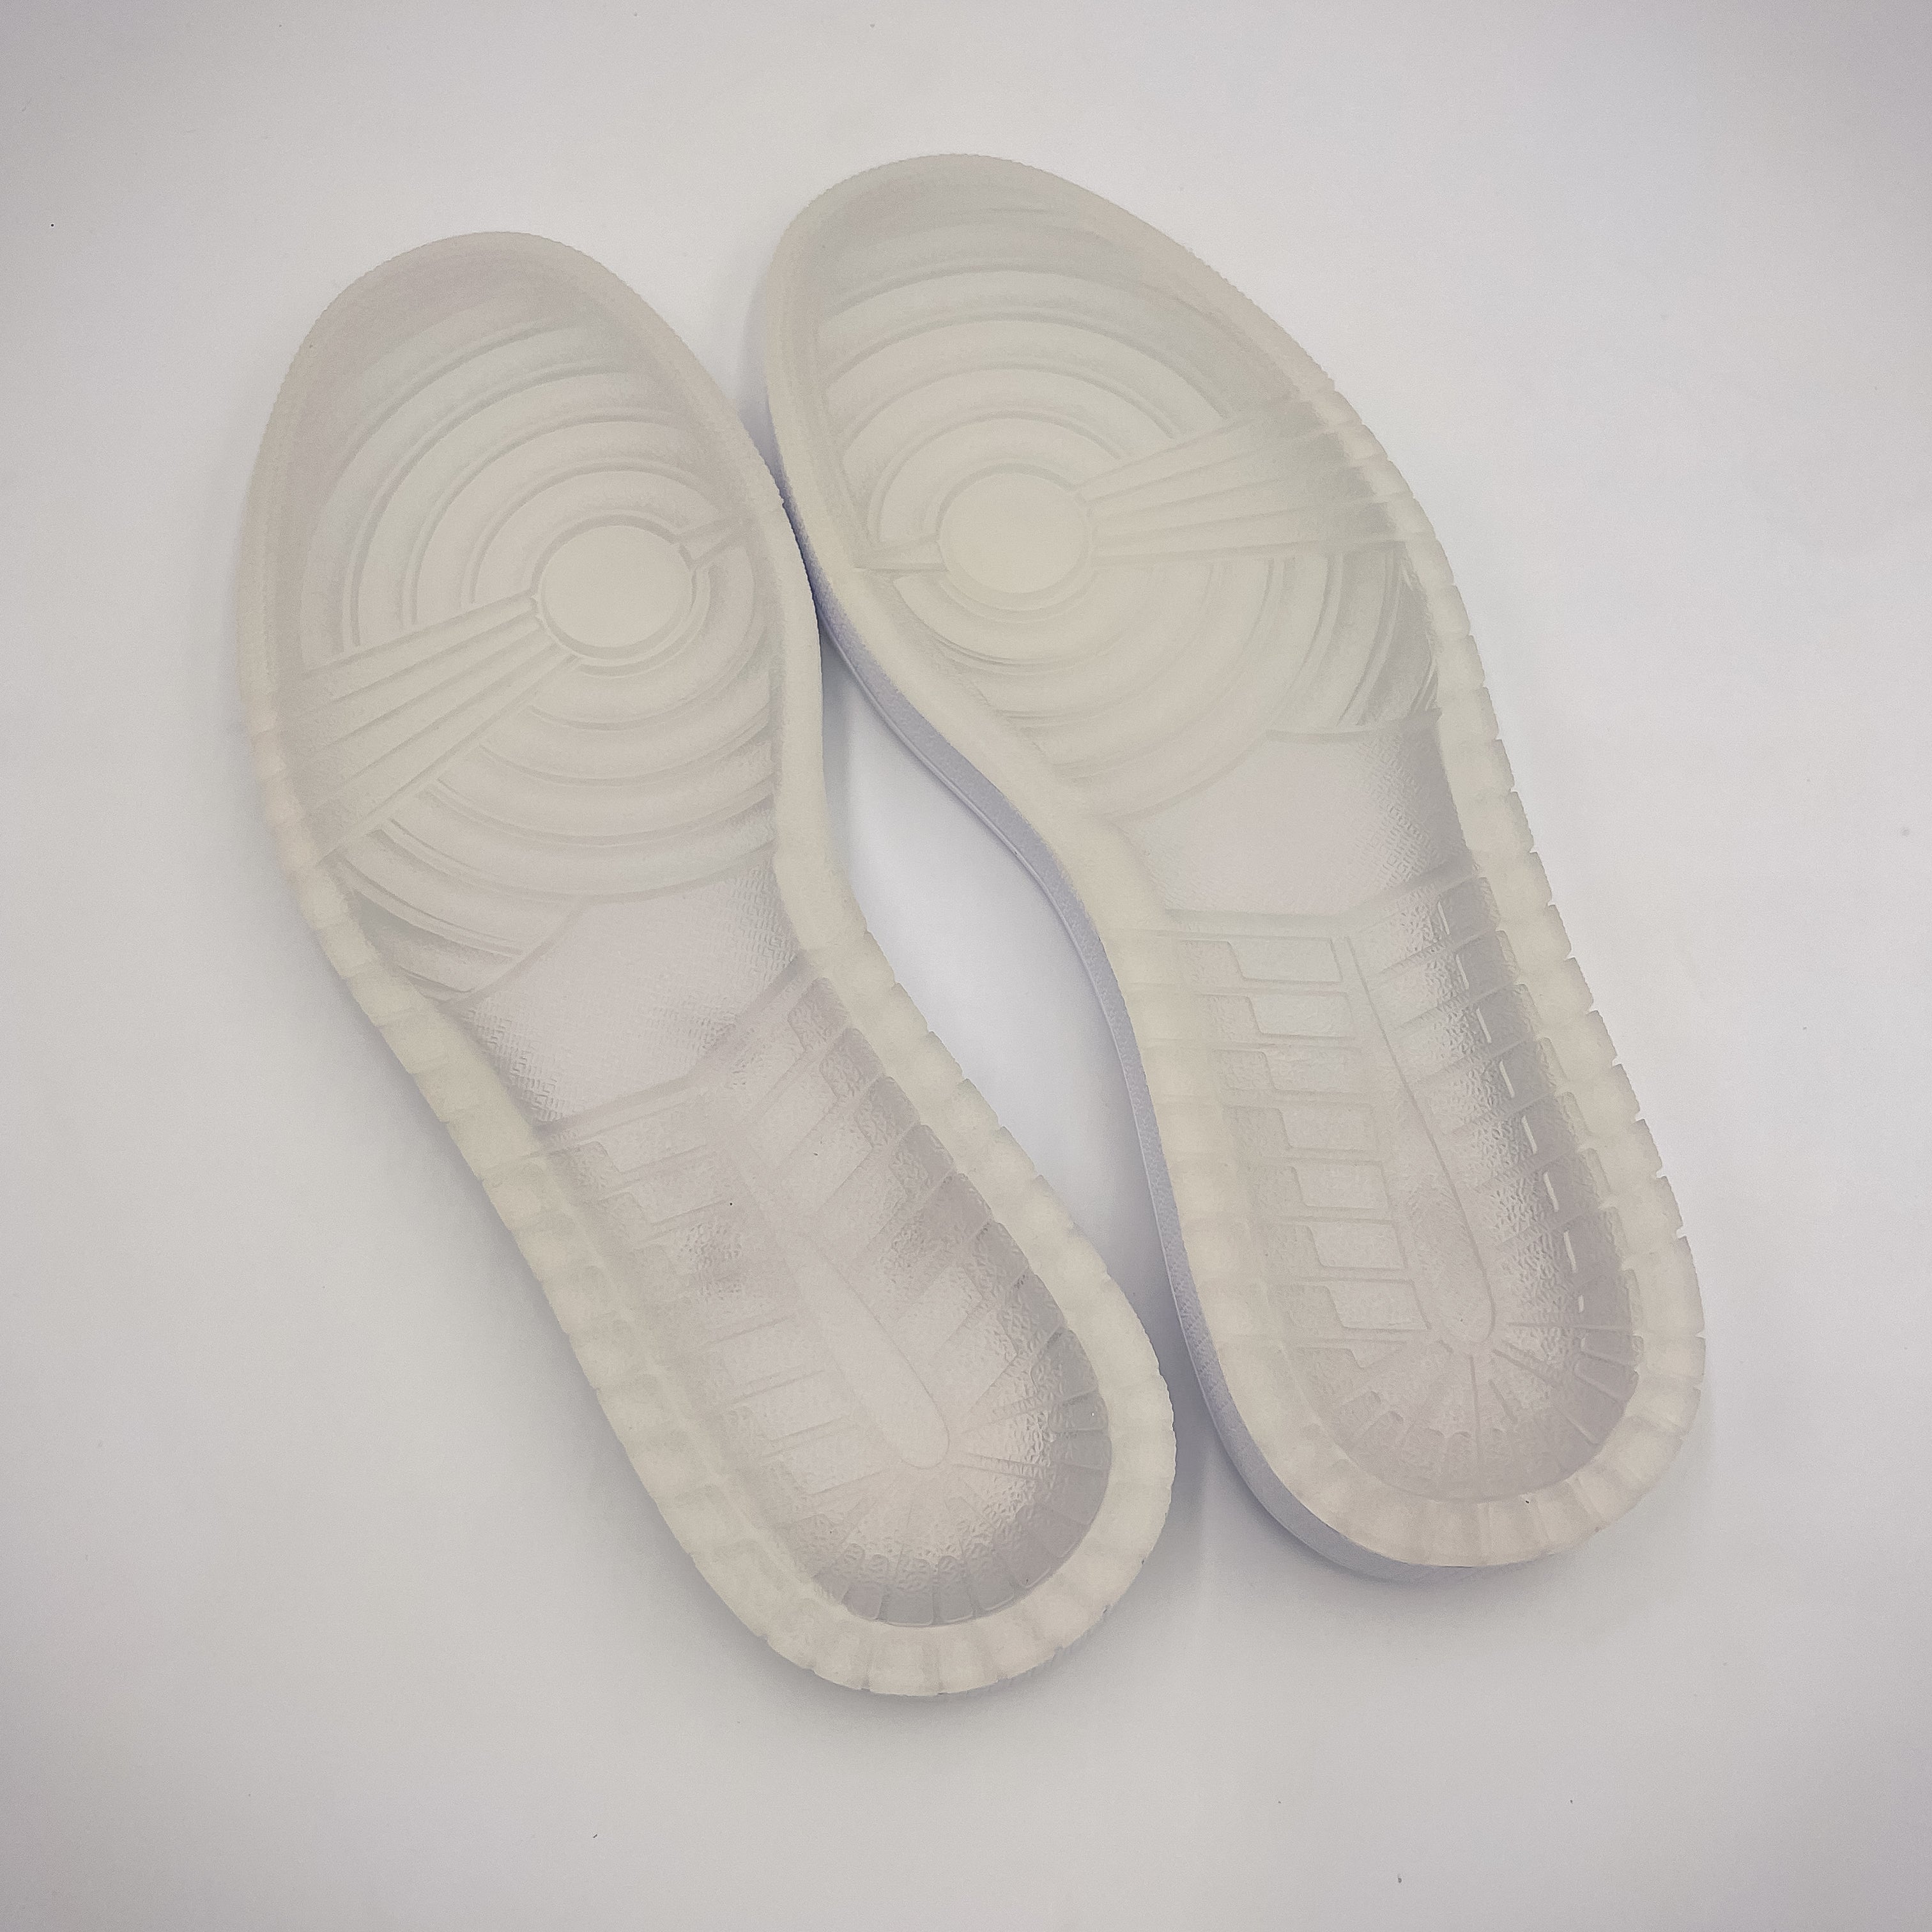 Basketball (AJ1) Shoe Soles, White/Clear